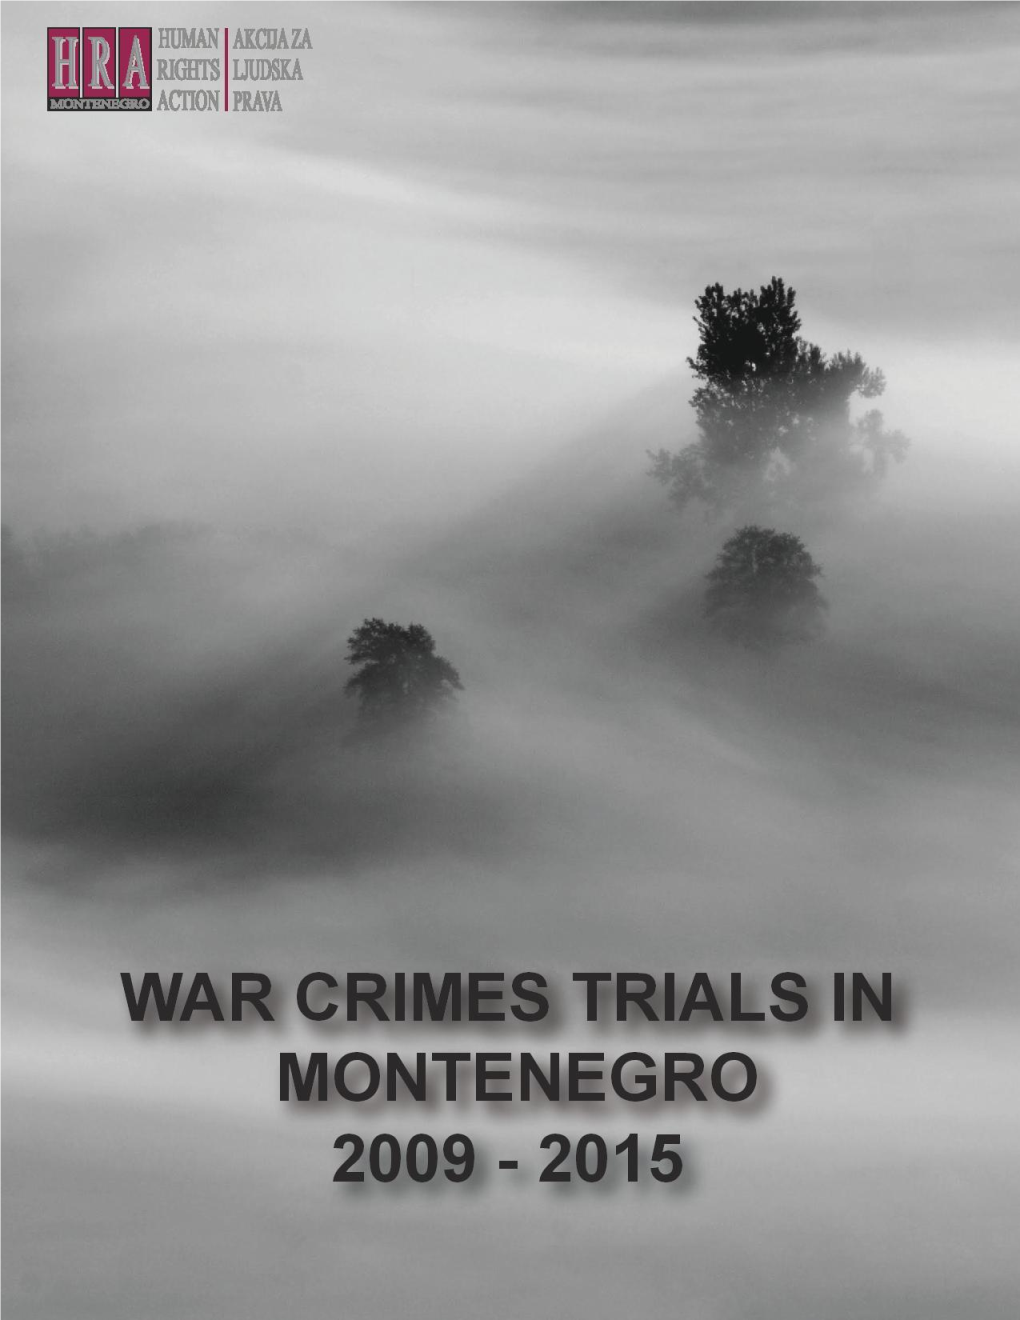 International Organizations on the Prosecution of War Crimes in Montenegro